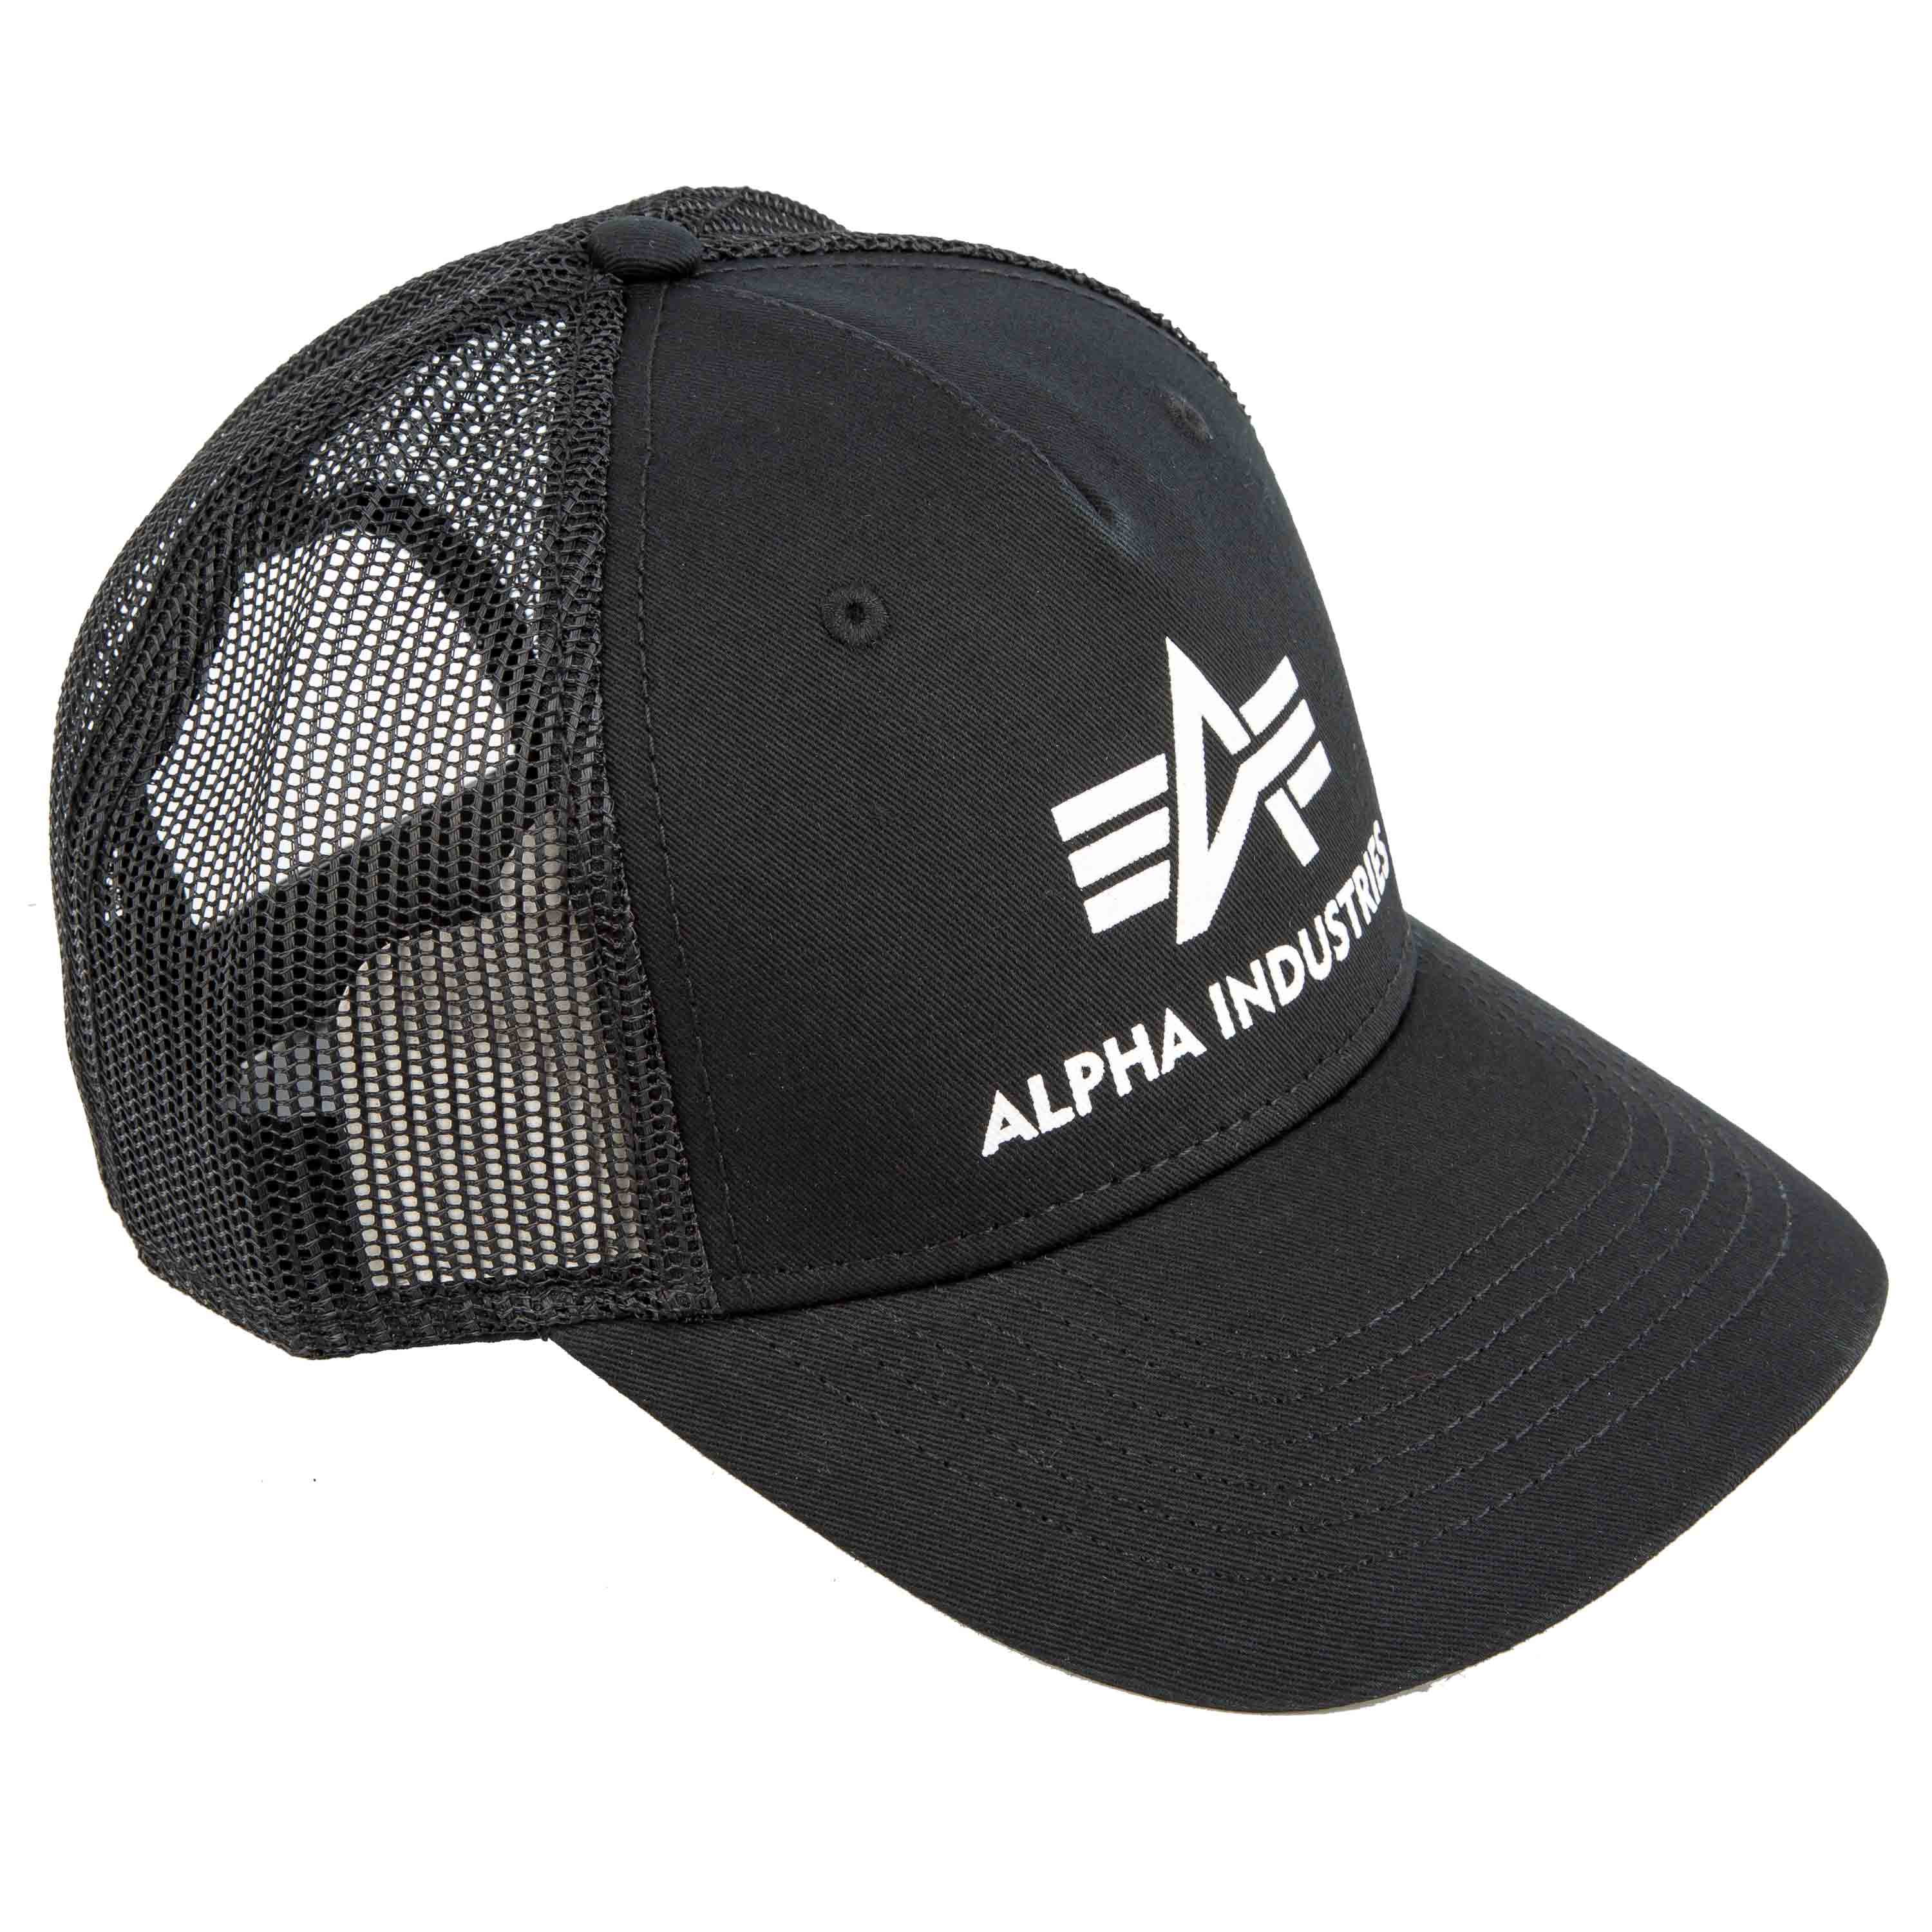 Baseball Industries the Purchase b black Trucker Cap Basic Alpha